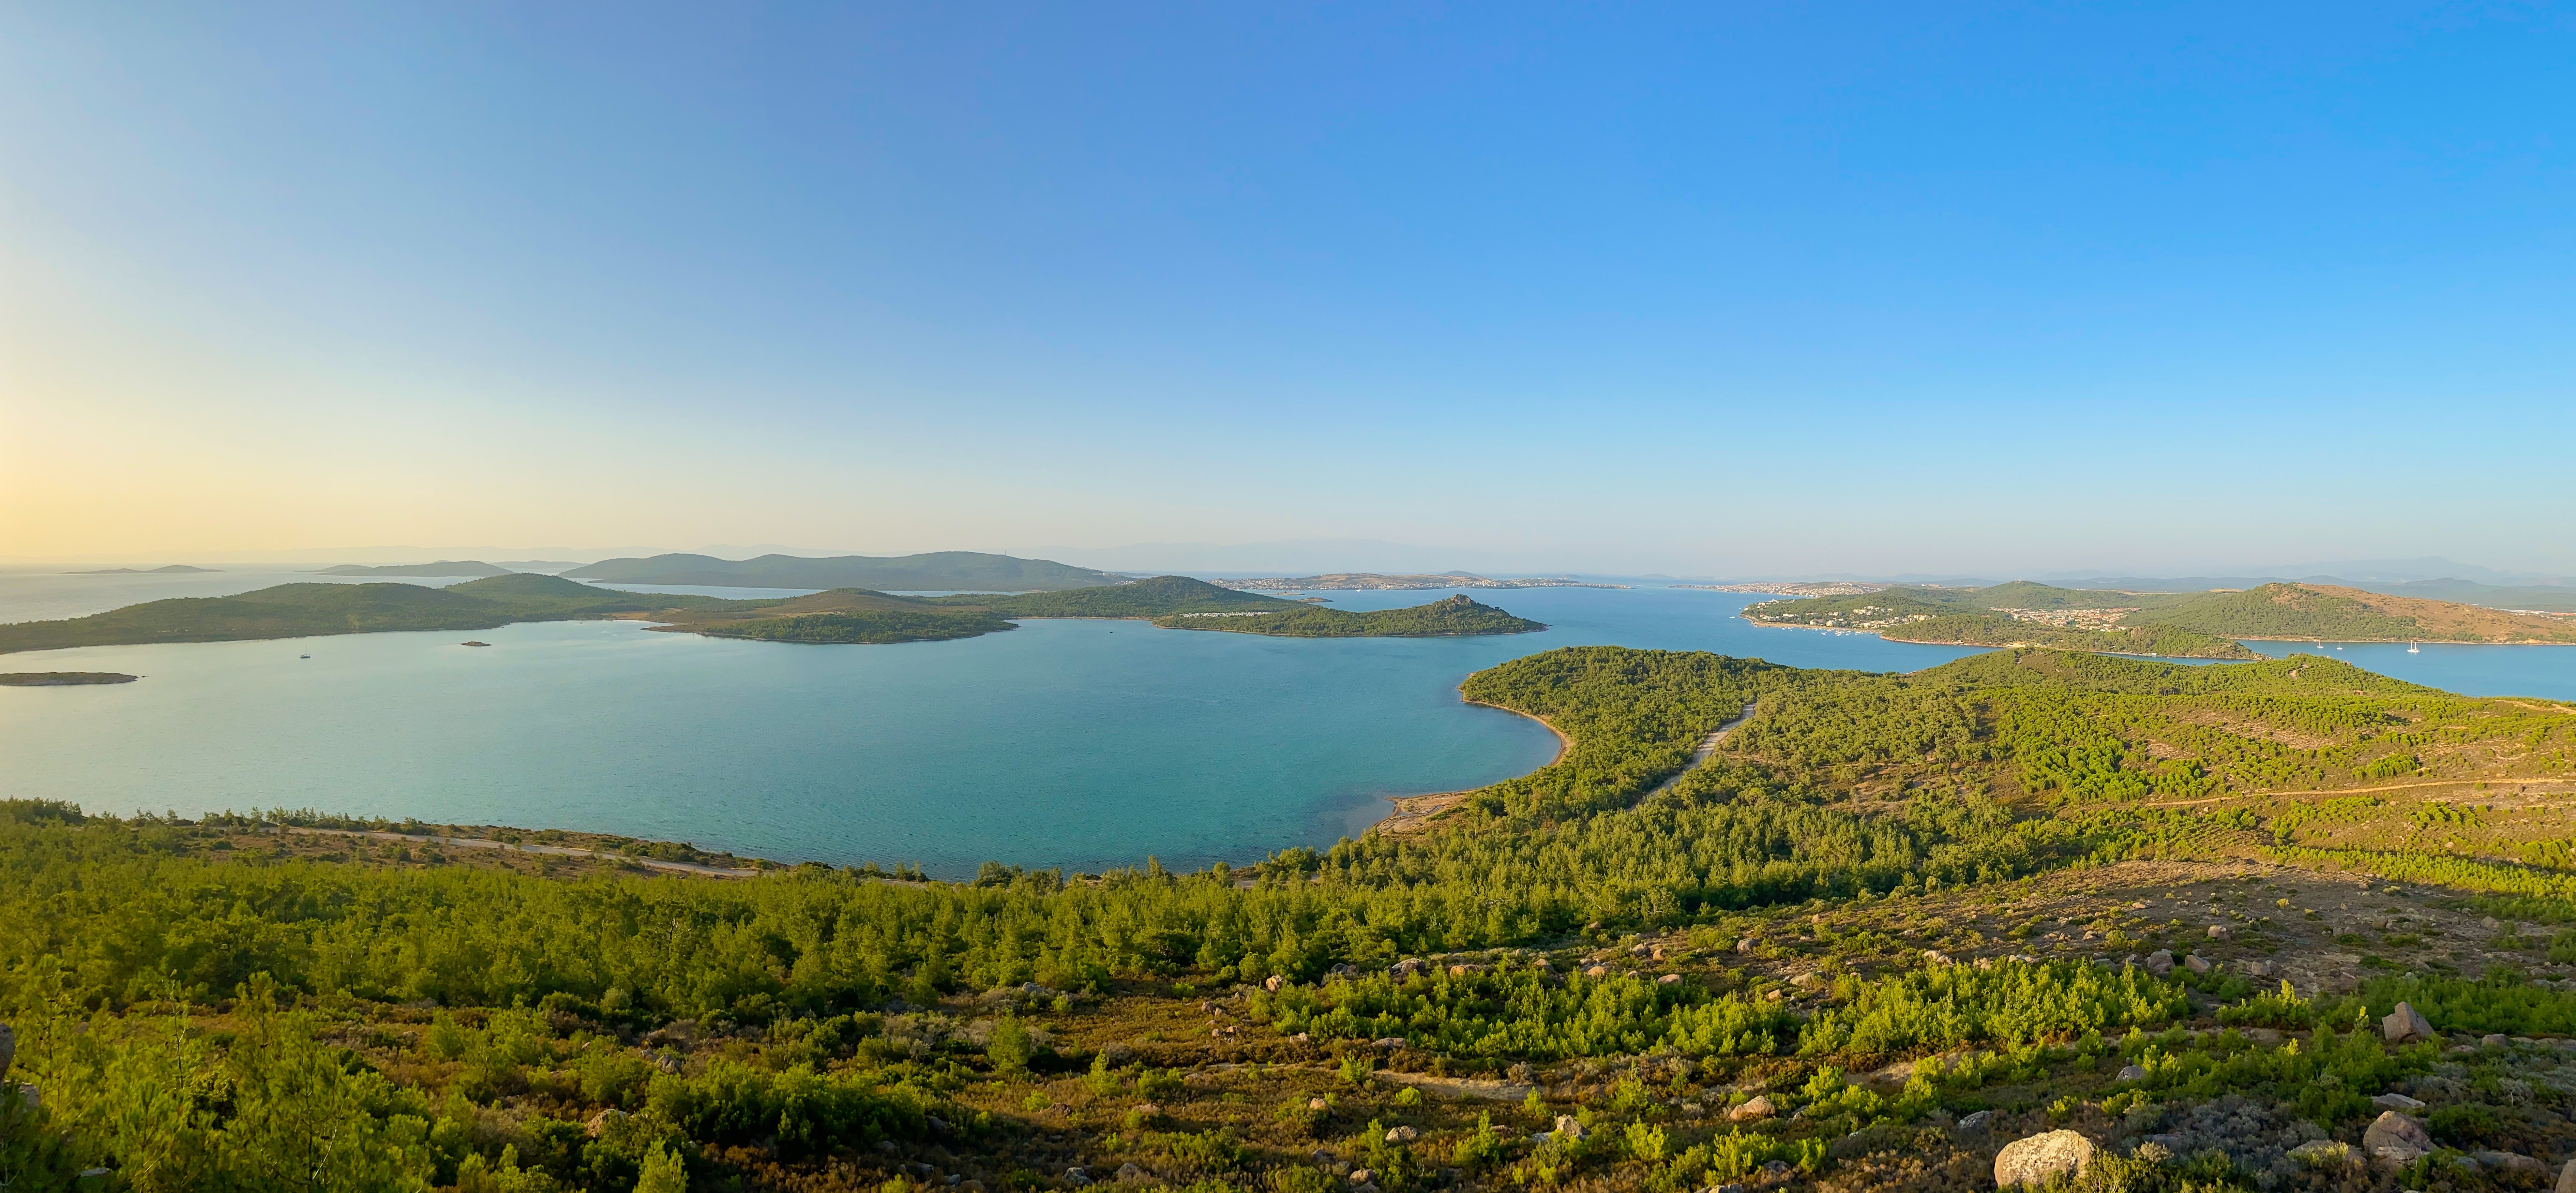 Cunda Island, Islands in Turkey 